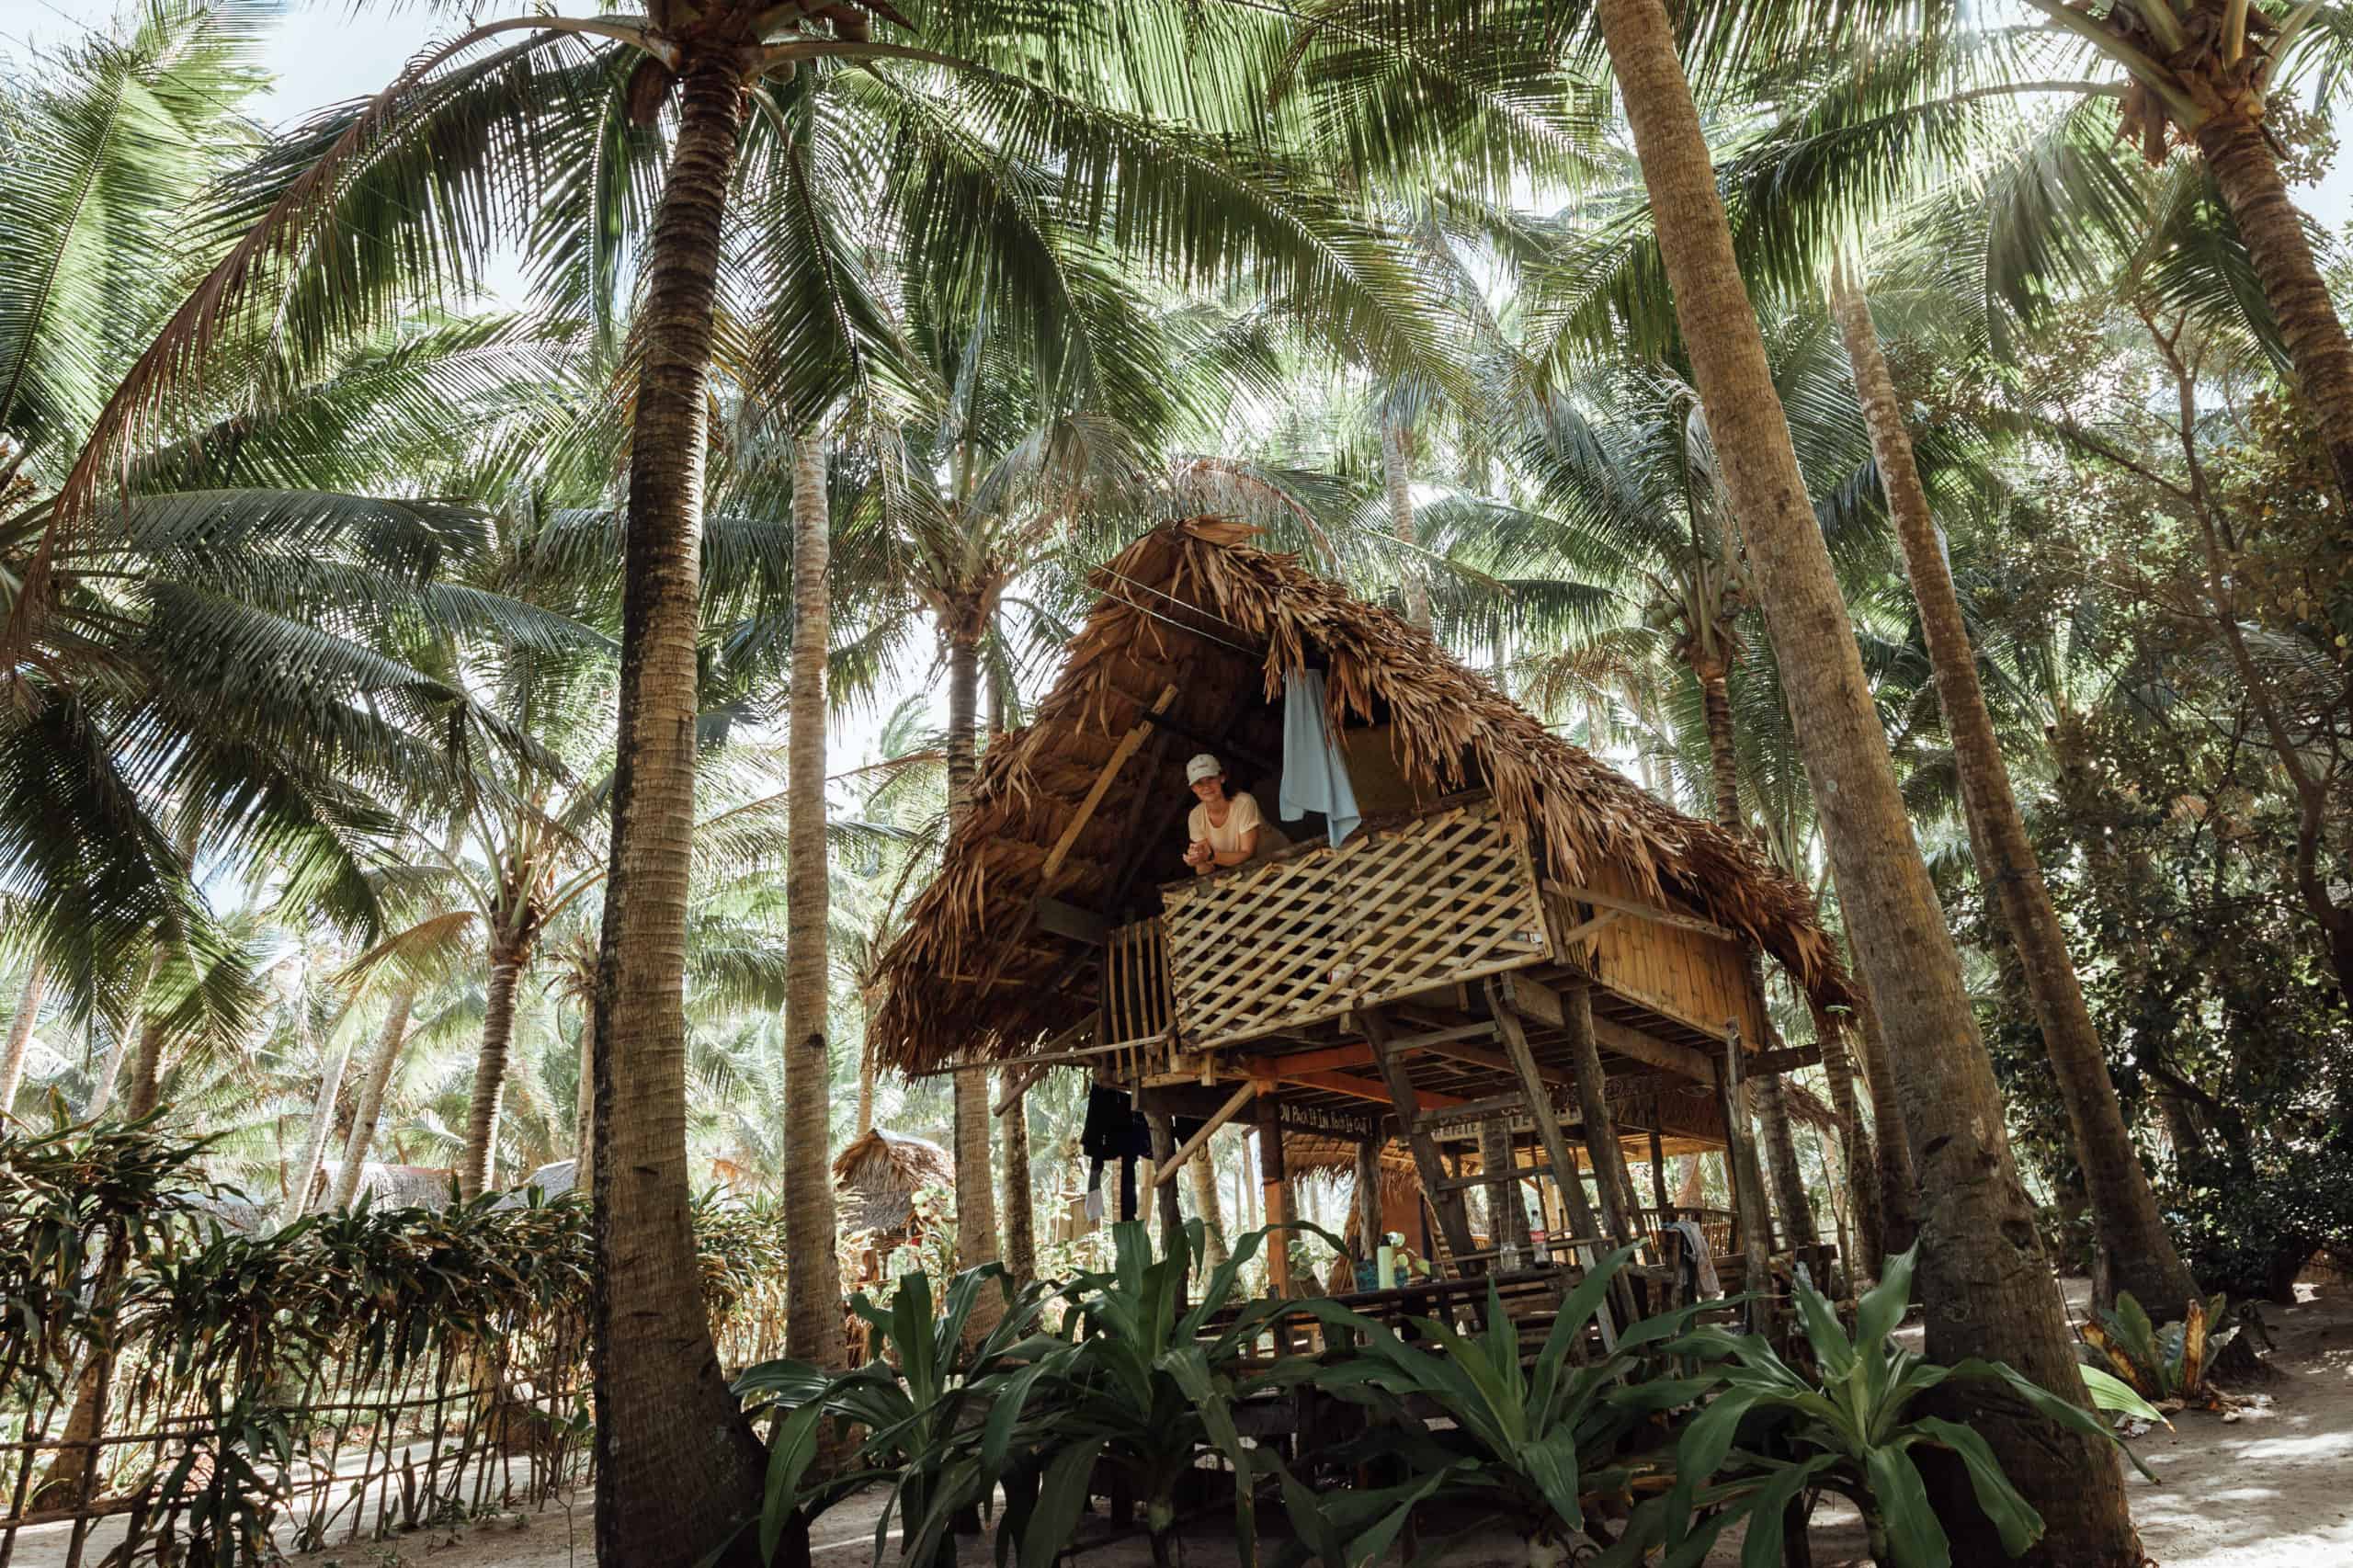 Beach hut in the Philippines